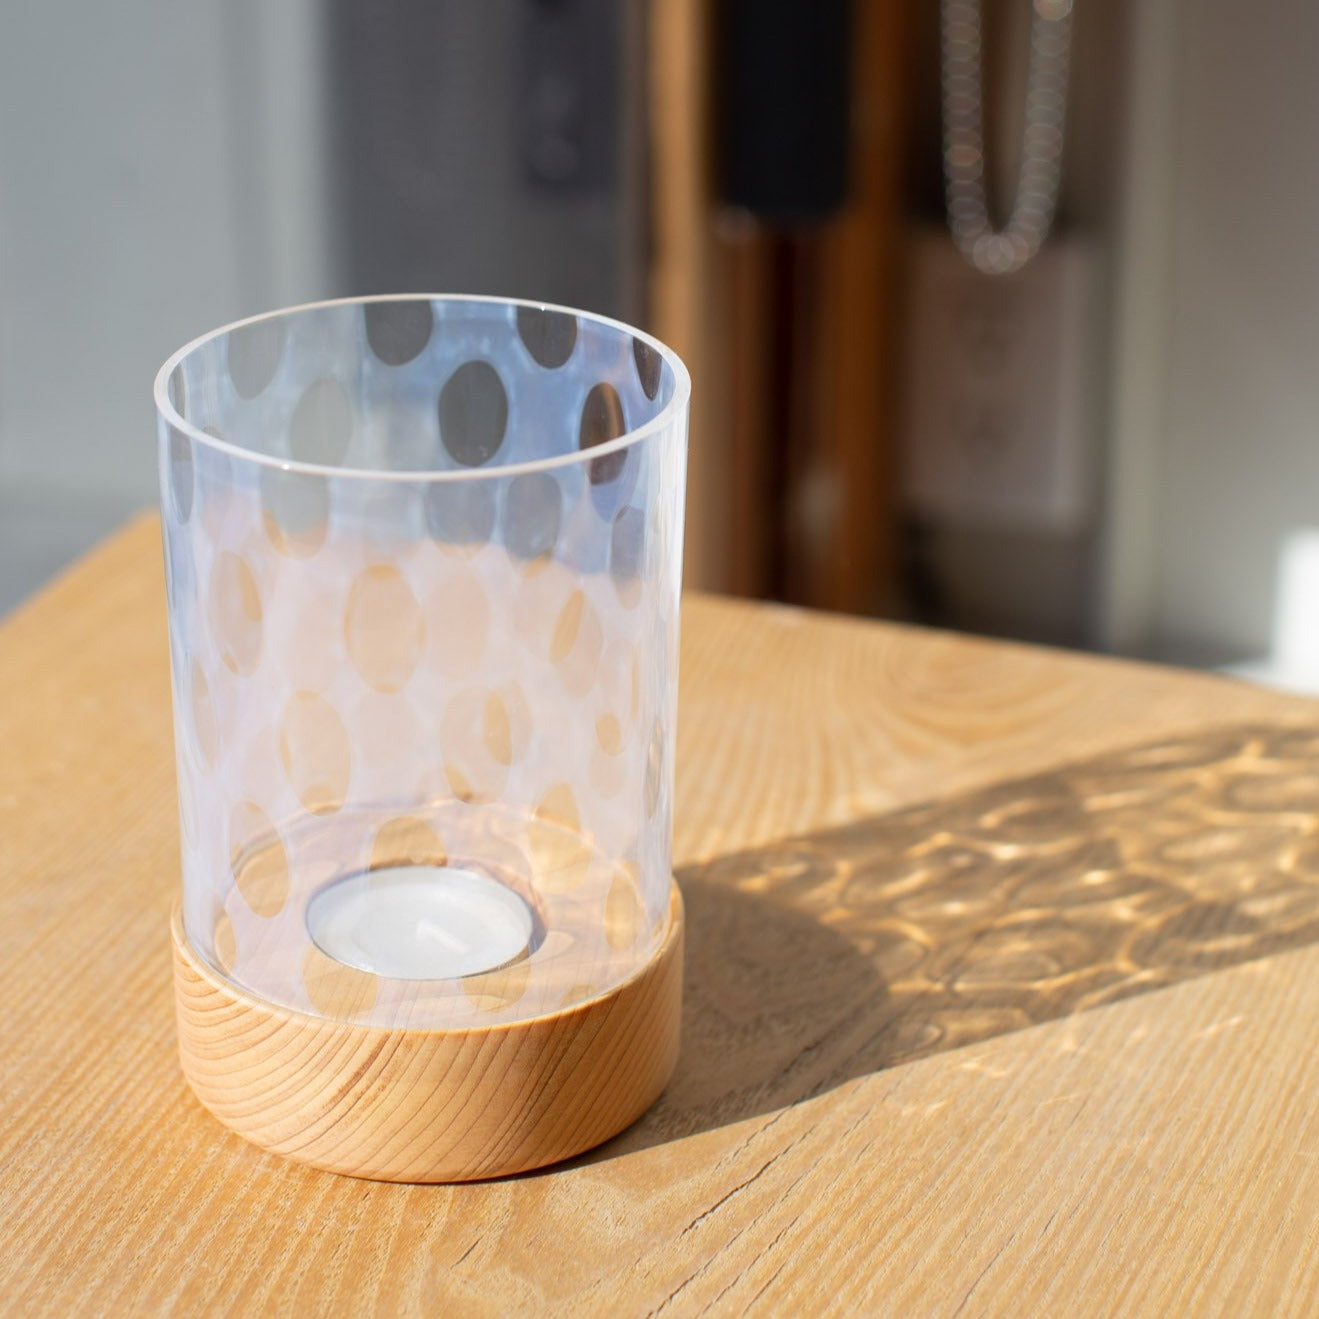 HIROTA Glass “Taisho Roman (大正浪漫)” Candle Holder with Wooden Stand - Polka Dot